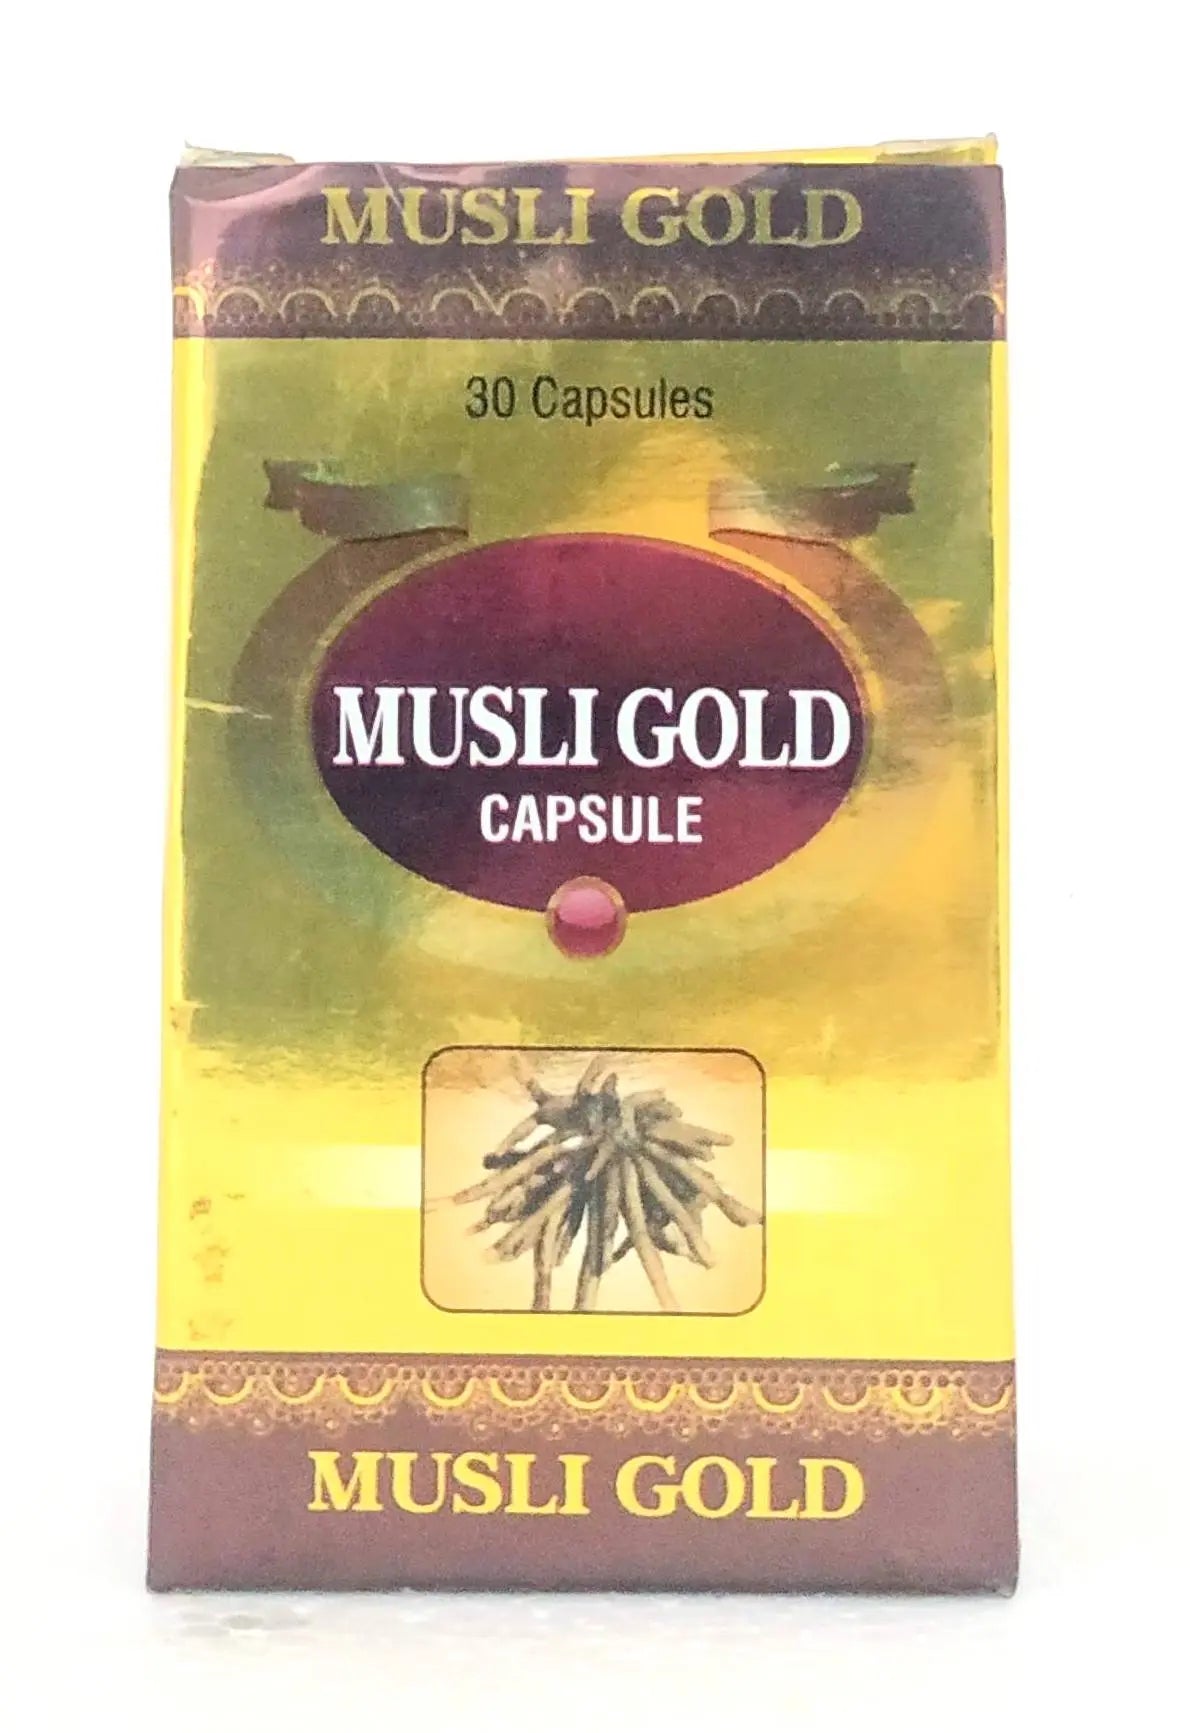 Musli gold capsules - 30capsules Musli gold